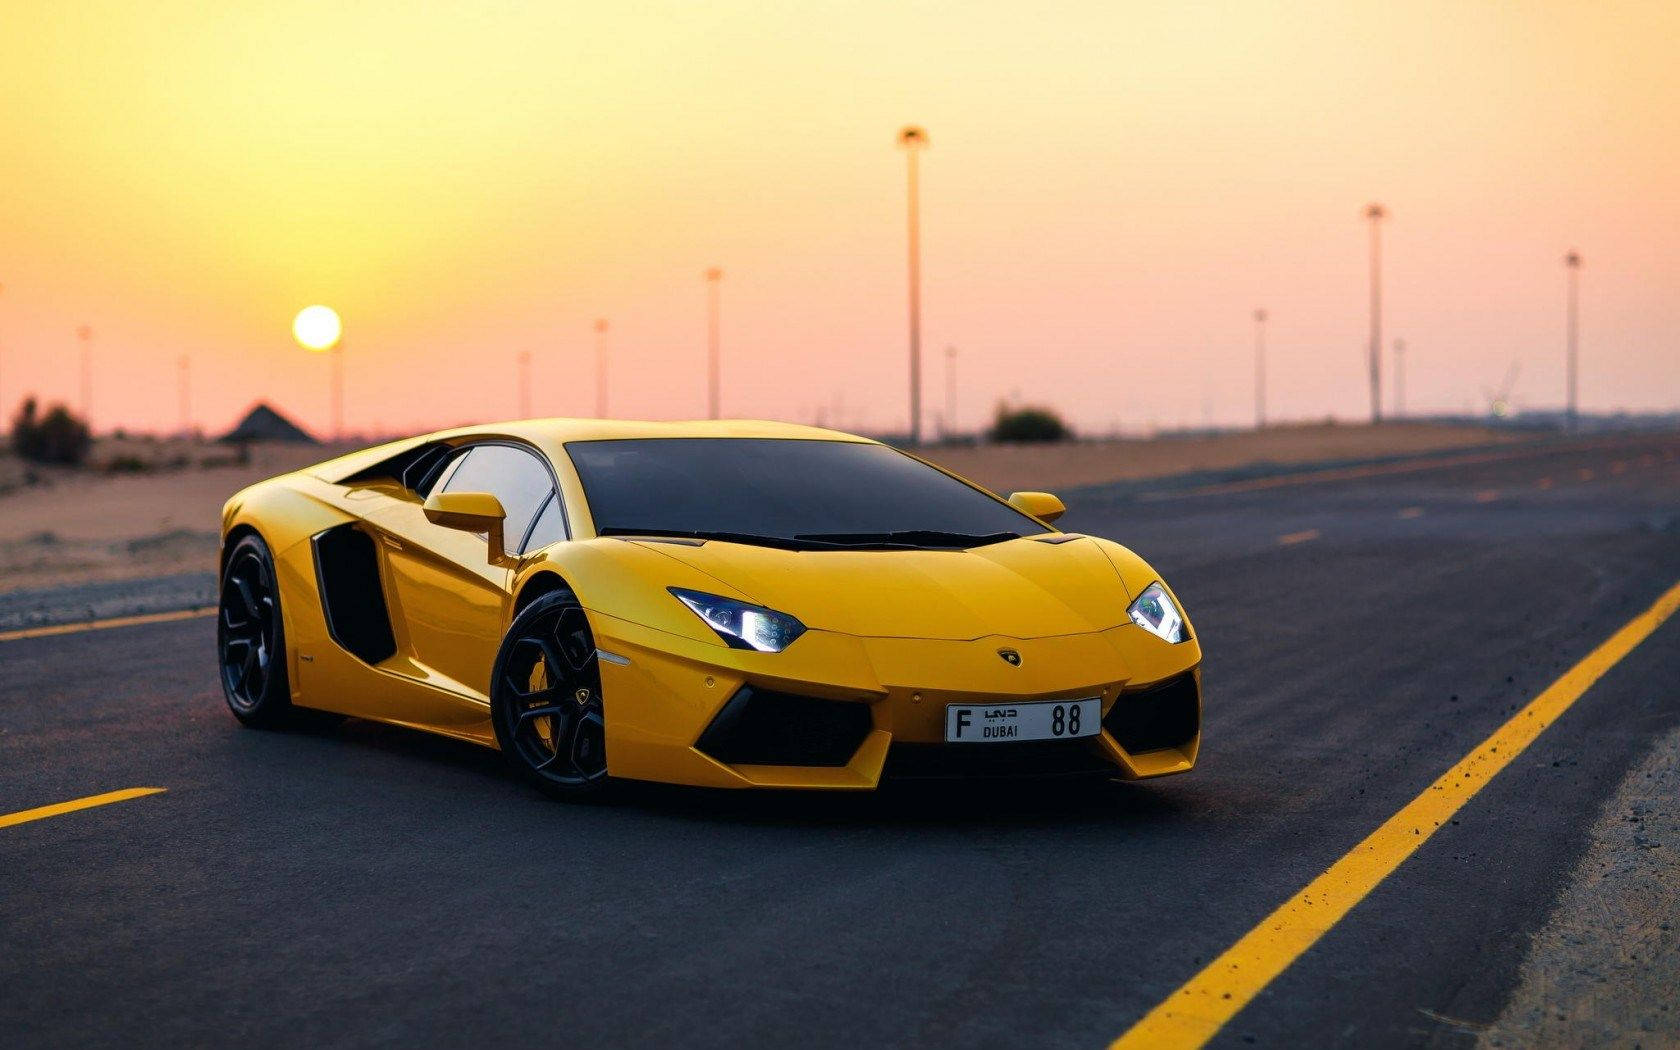 The Majestic Yellow Lamborghini Aventador at Sunset Wallpaper